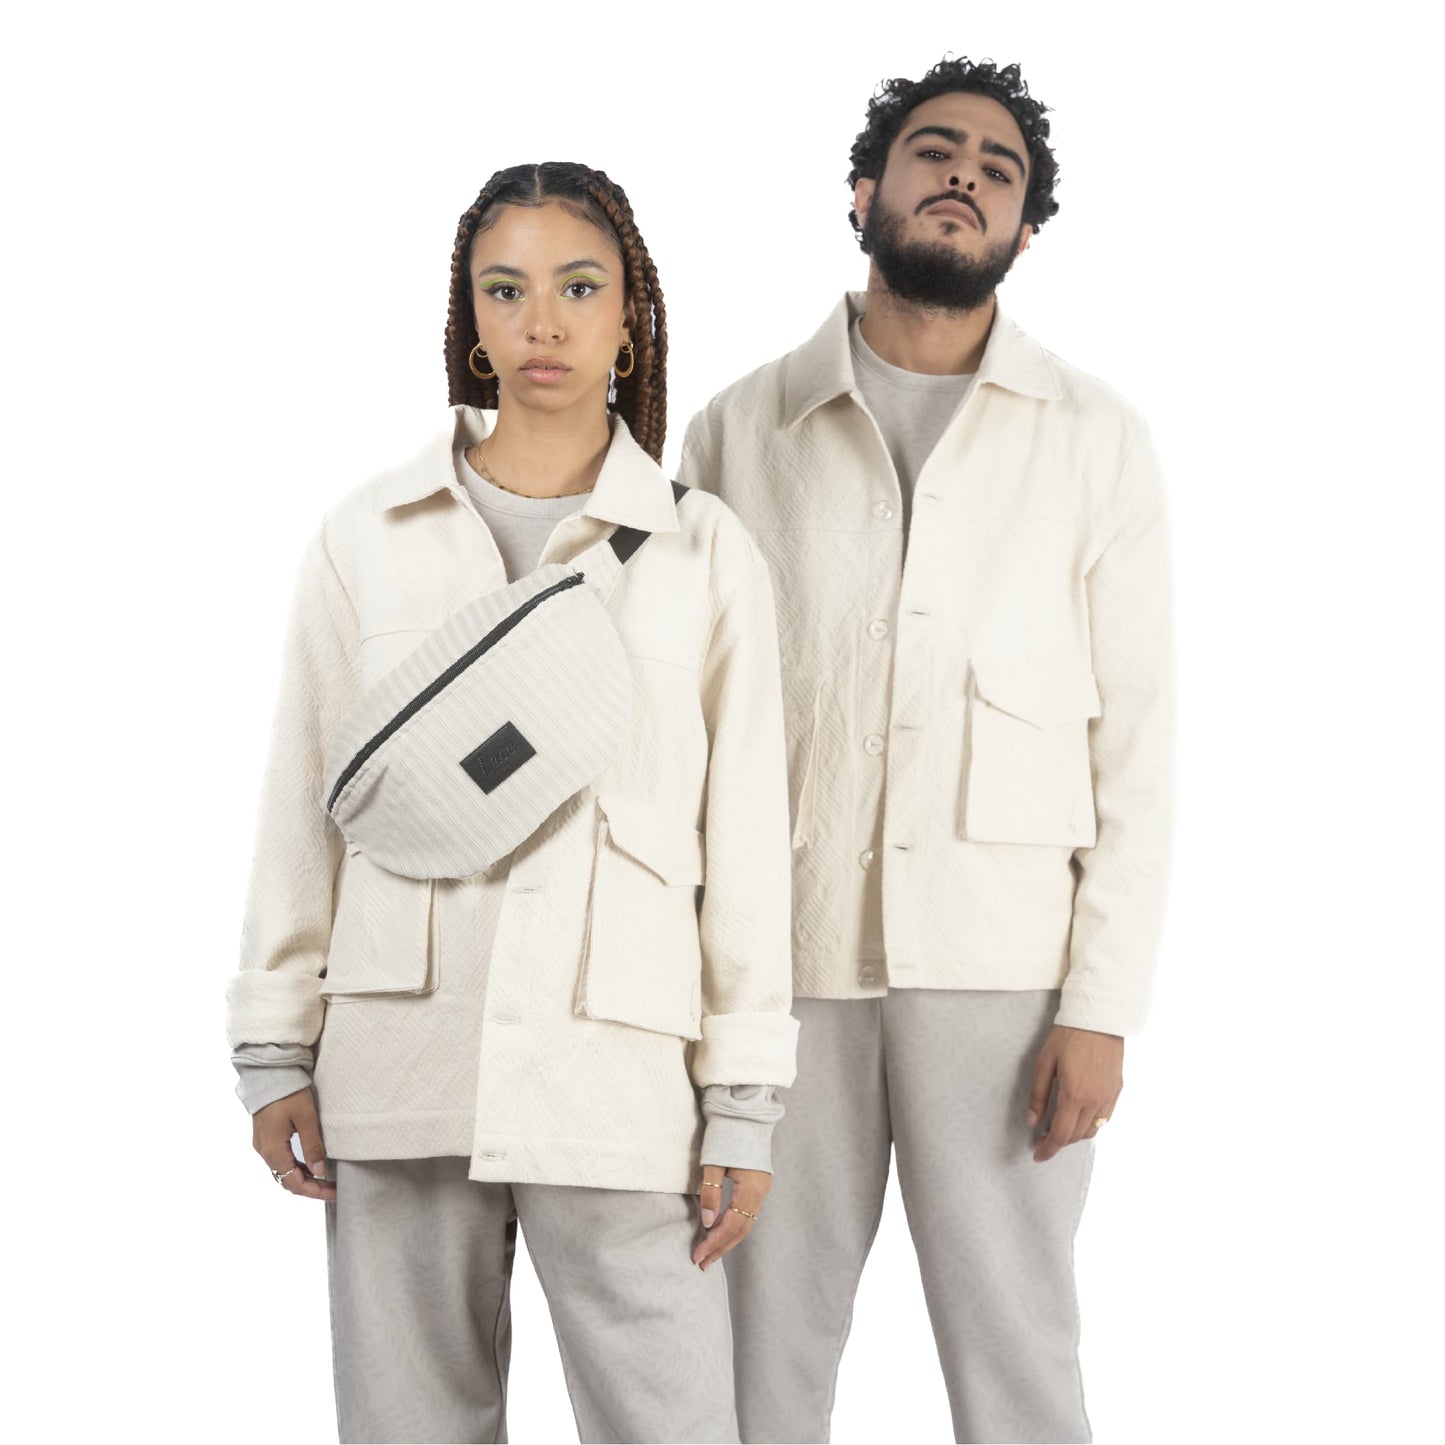 lucewear: homme et femme portant maxi sac banane velours beige porte